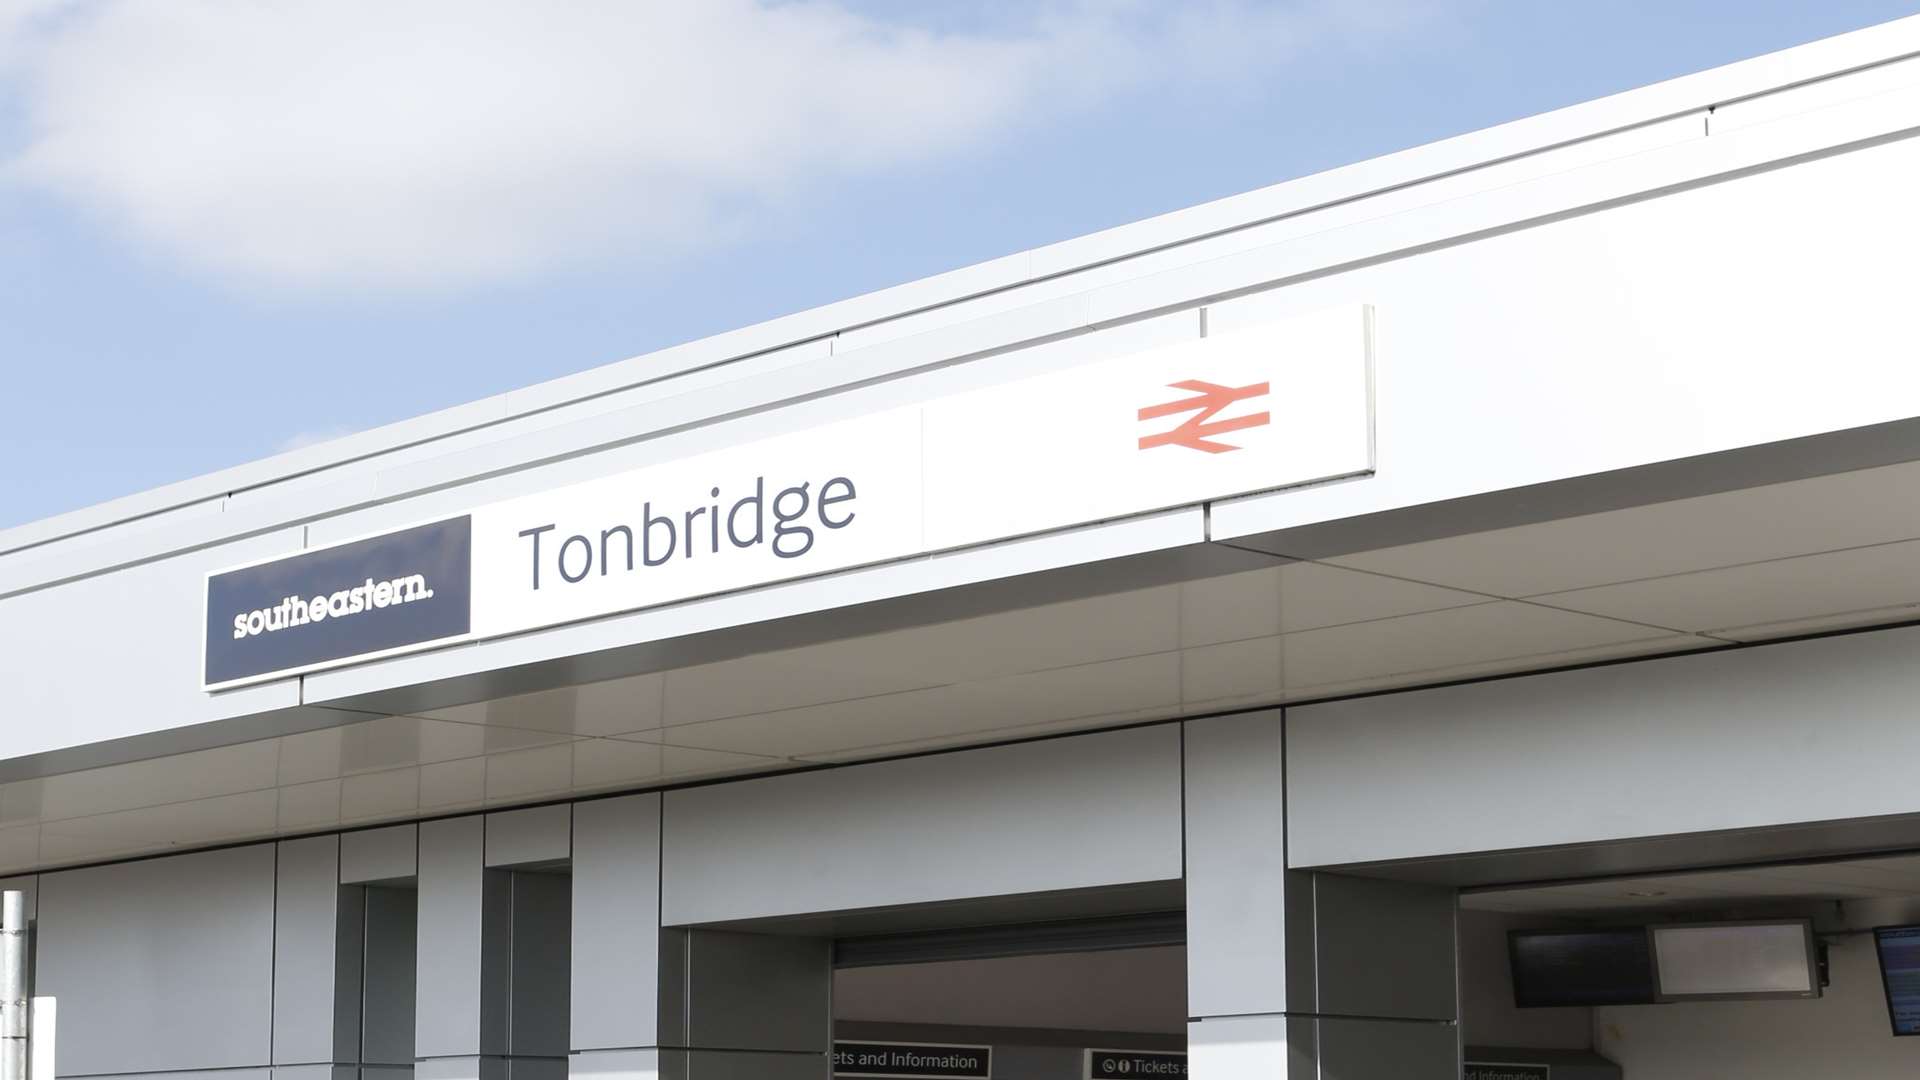 Tonbridge Railway Station